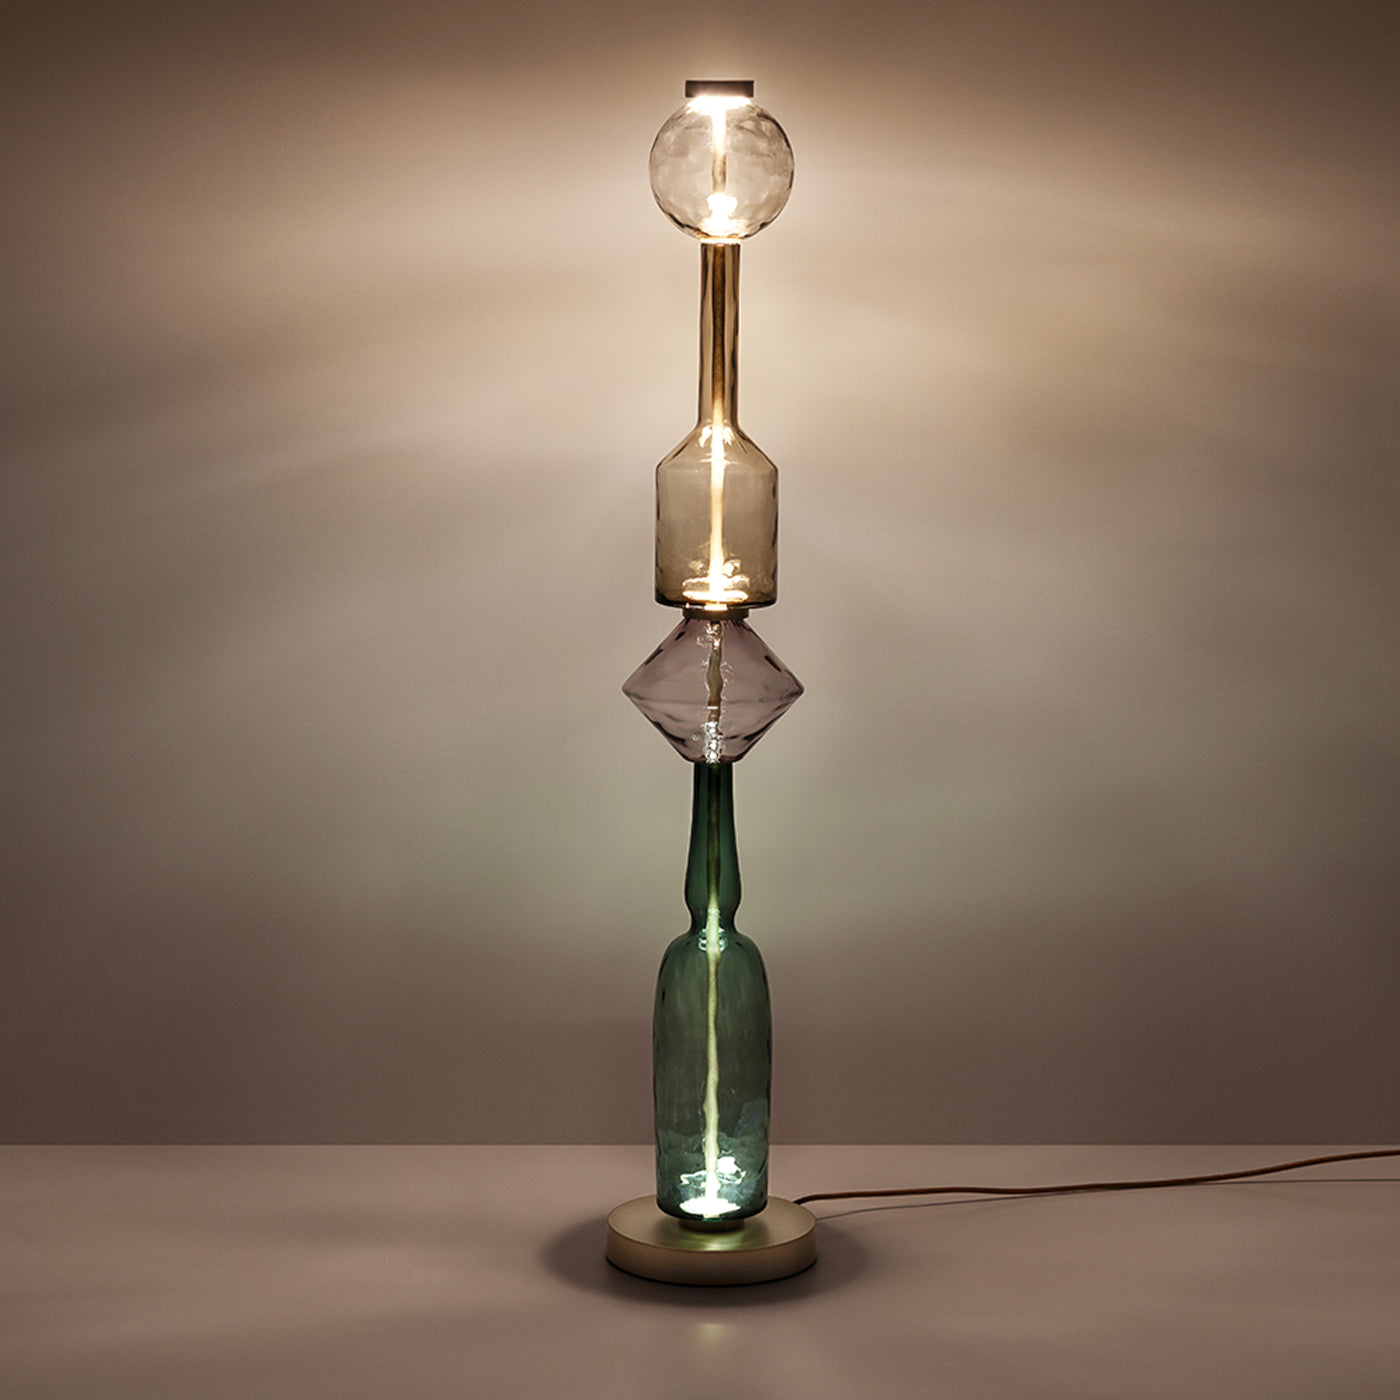 Morandi Icone Luminose Floor Lamp #1 - Alternative view 1